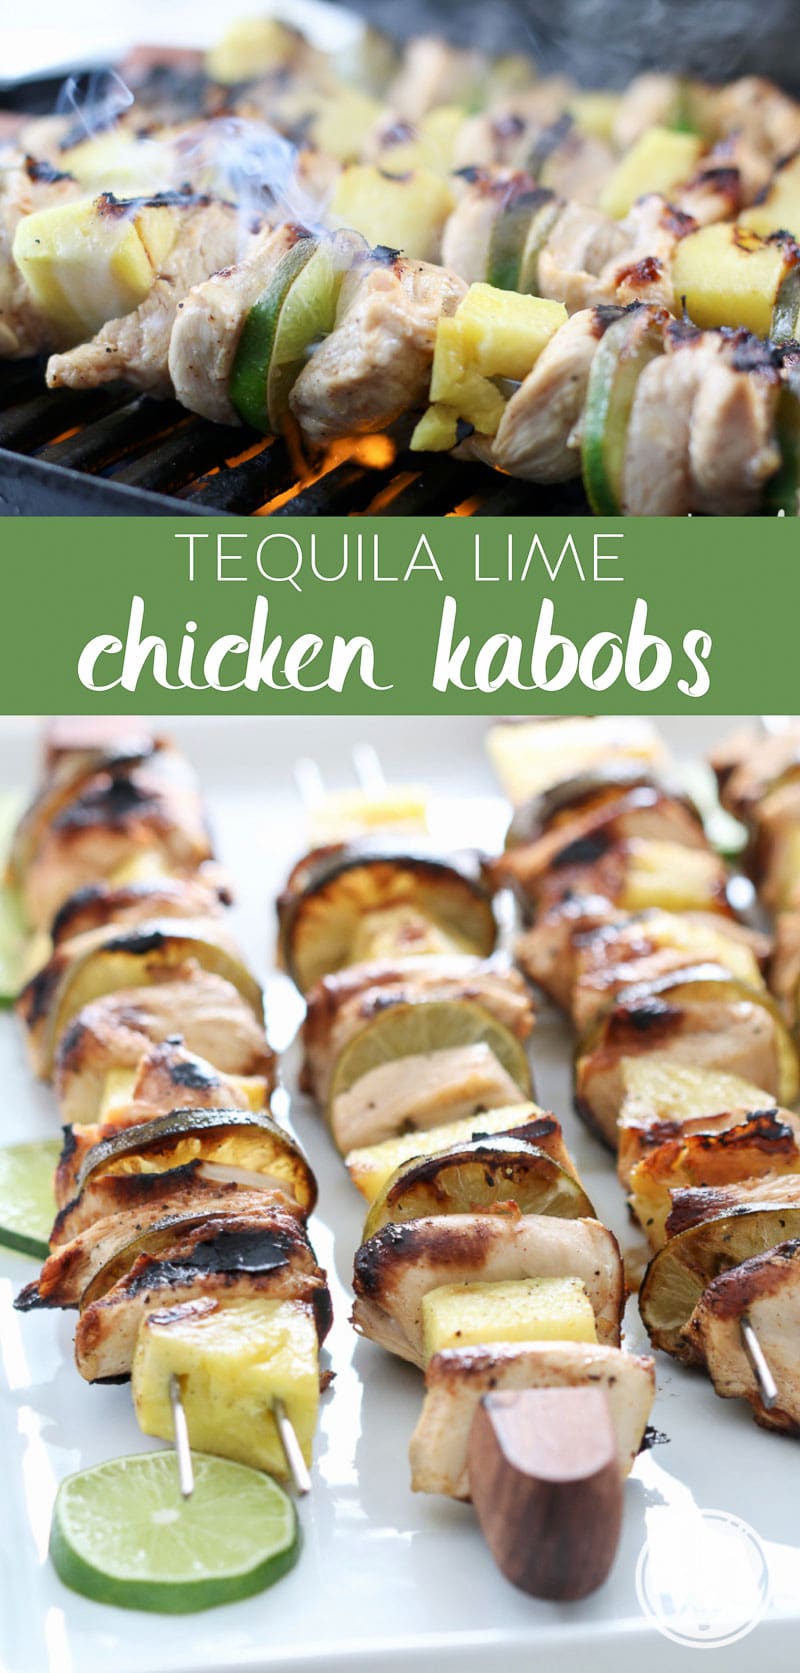 Tequila Lime Chicken Kabobs add unique flavor to summertime grilling! #kabobs #chicken #tequila #lime #recipe